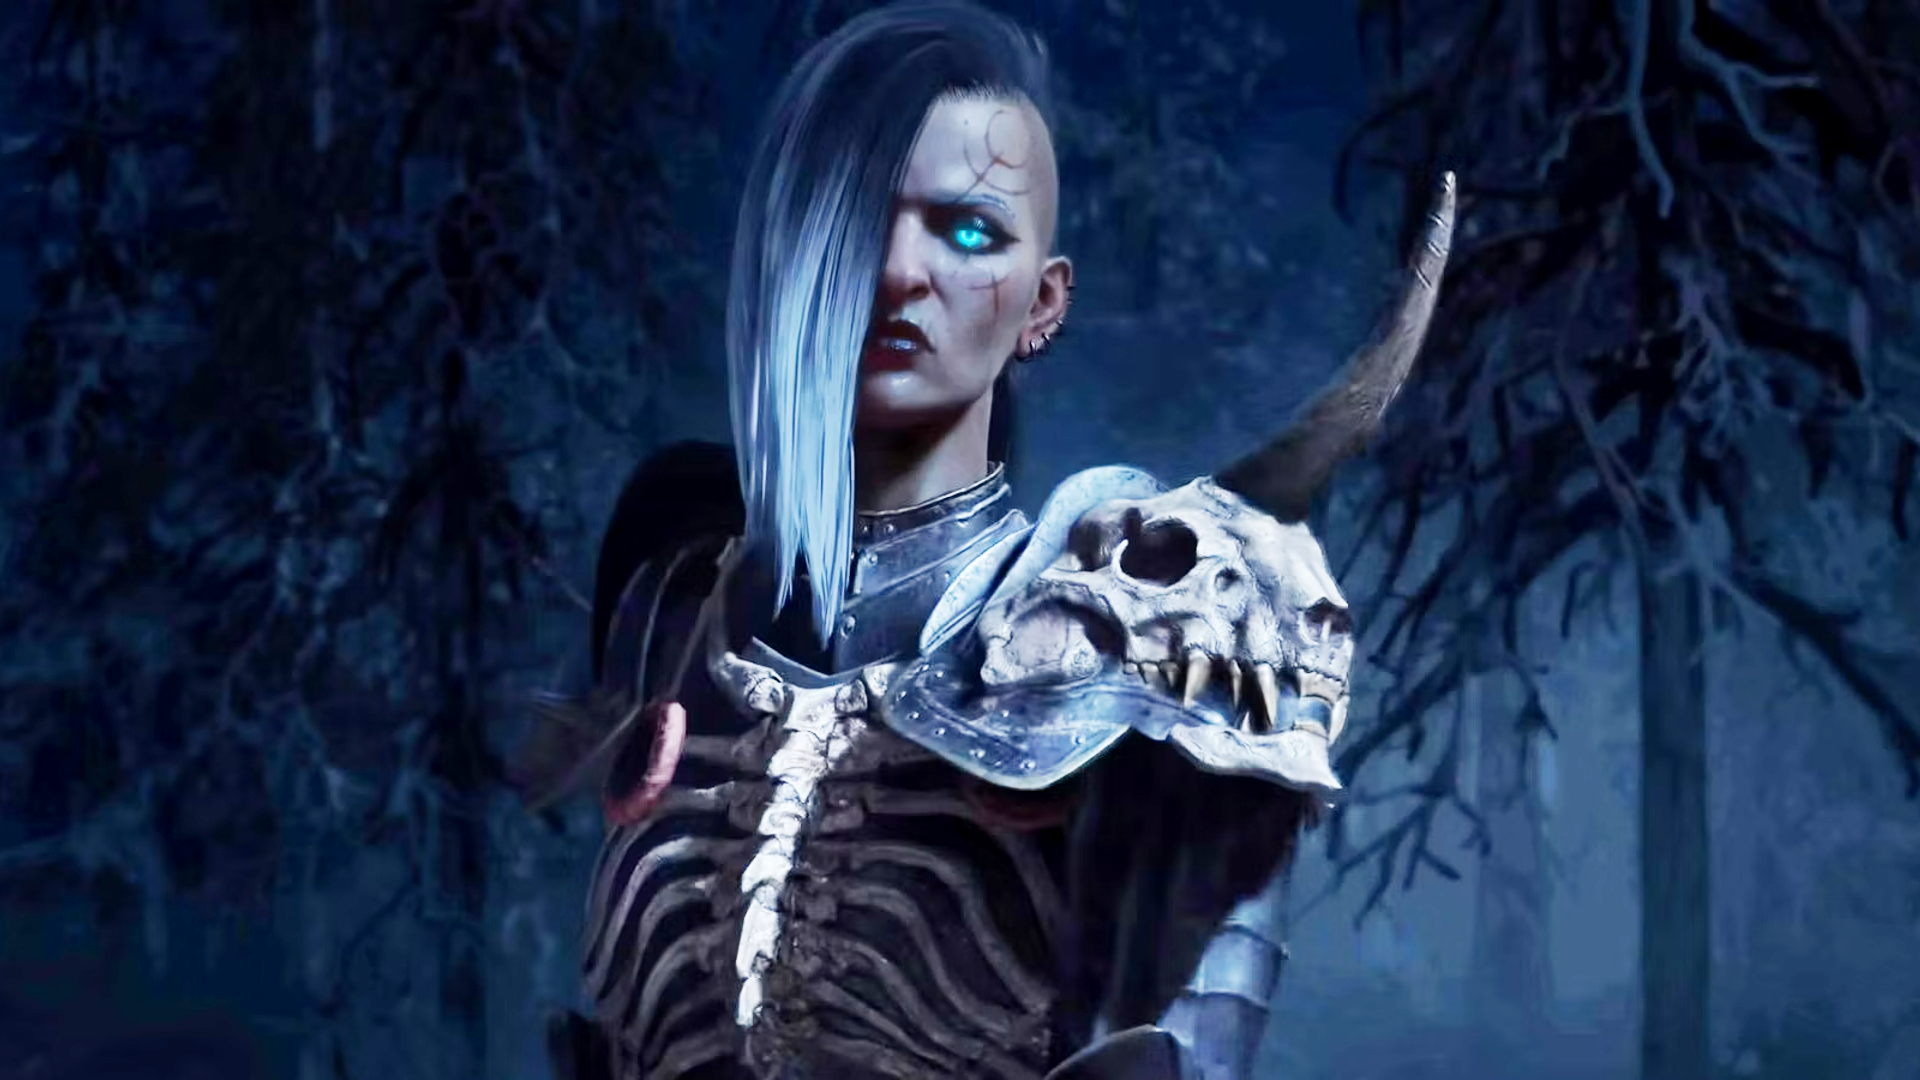 Diablo 4 endgame beta invites are coming, leaks Blizzard president